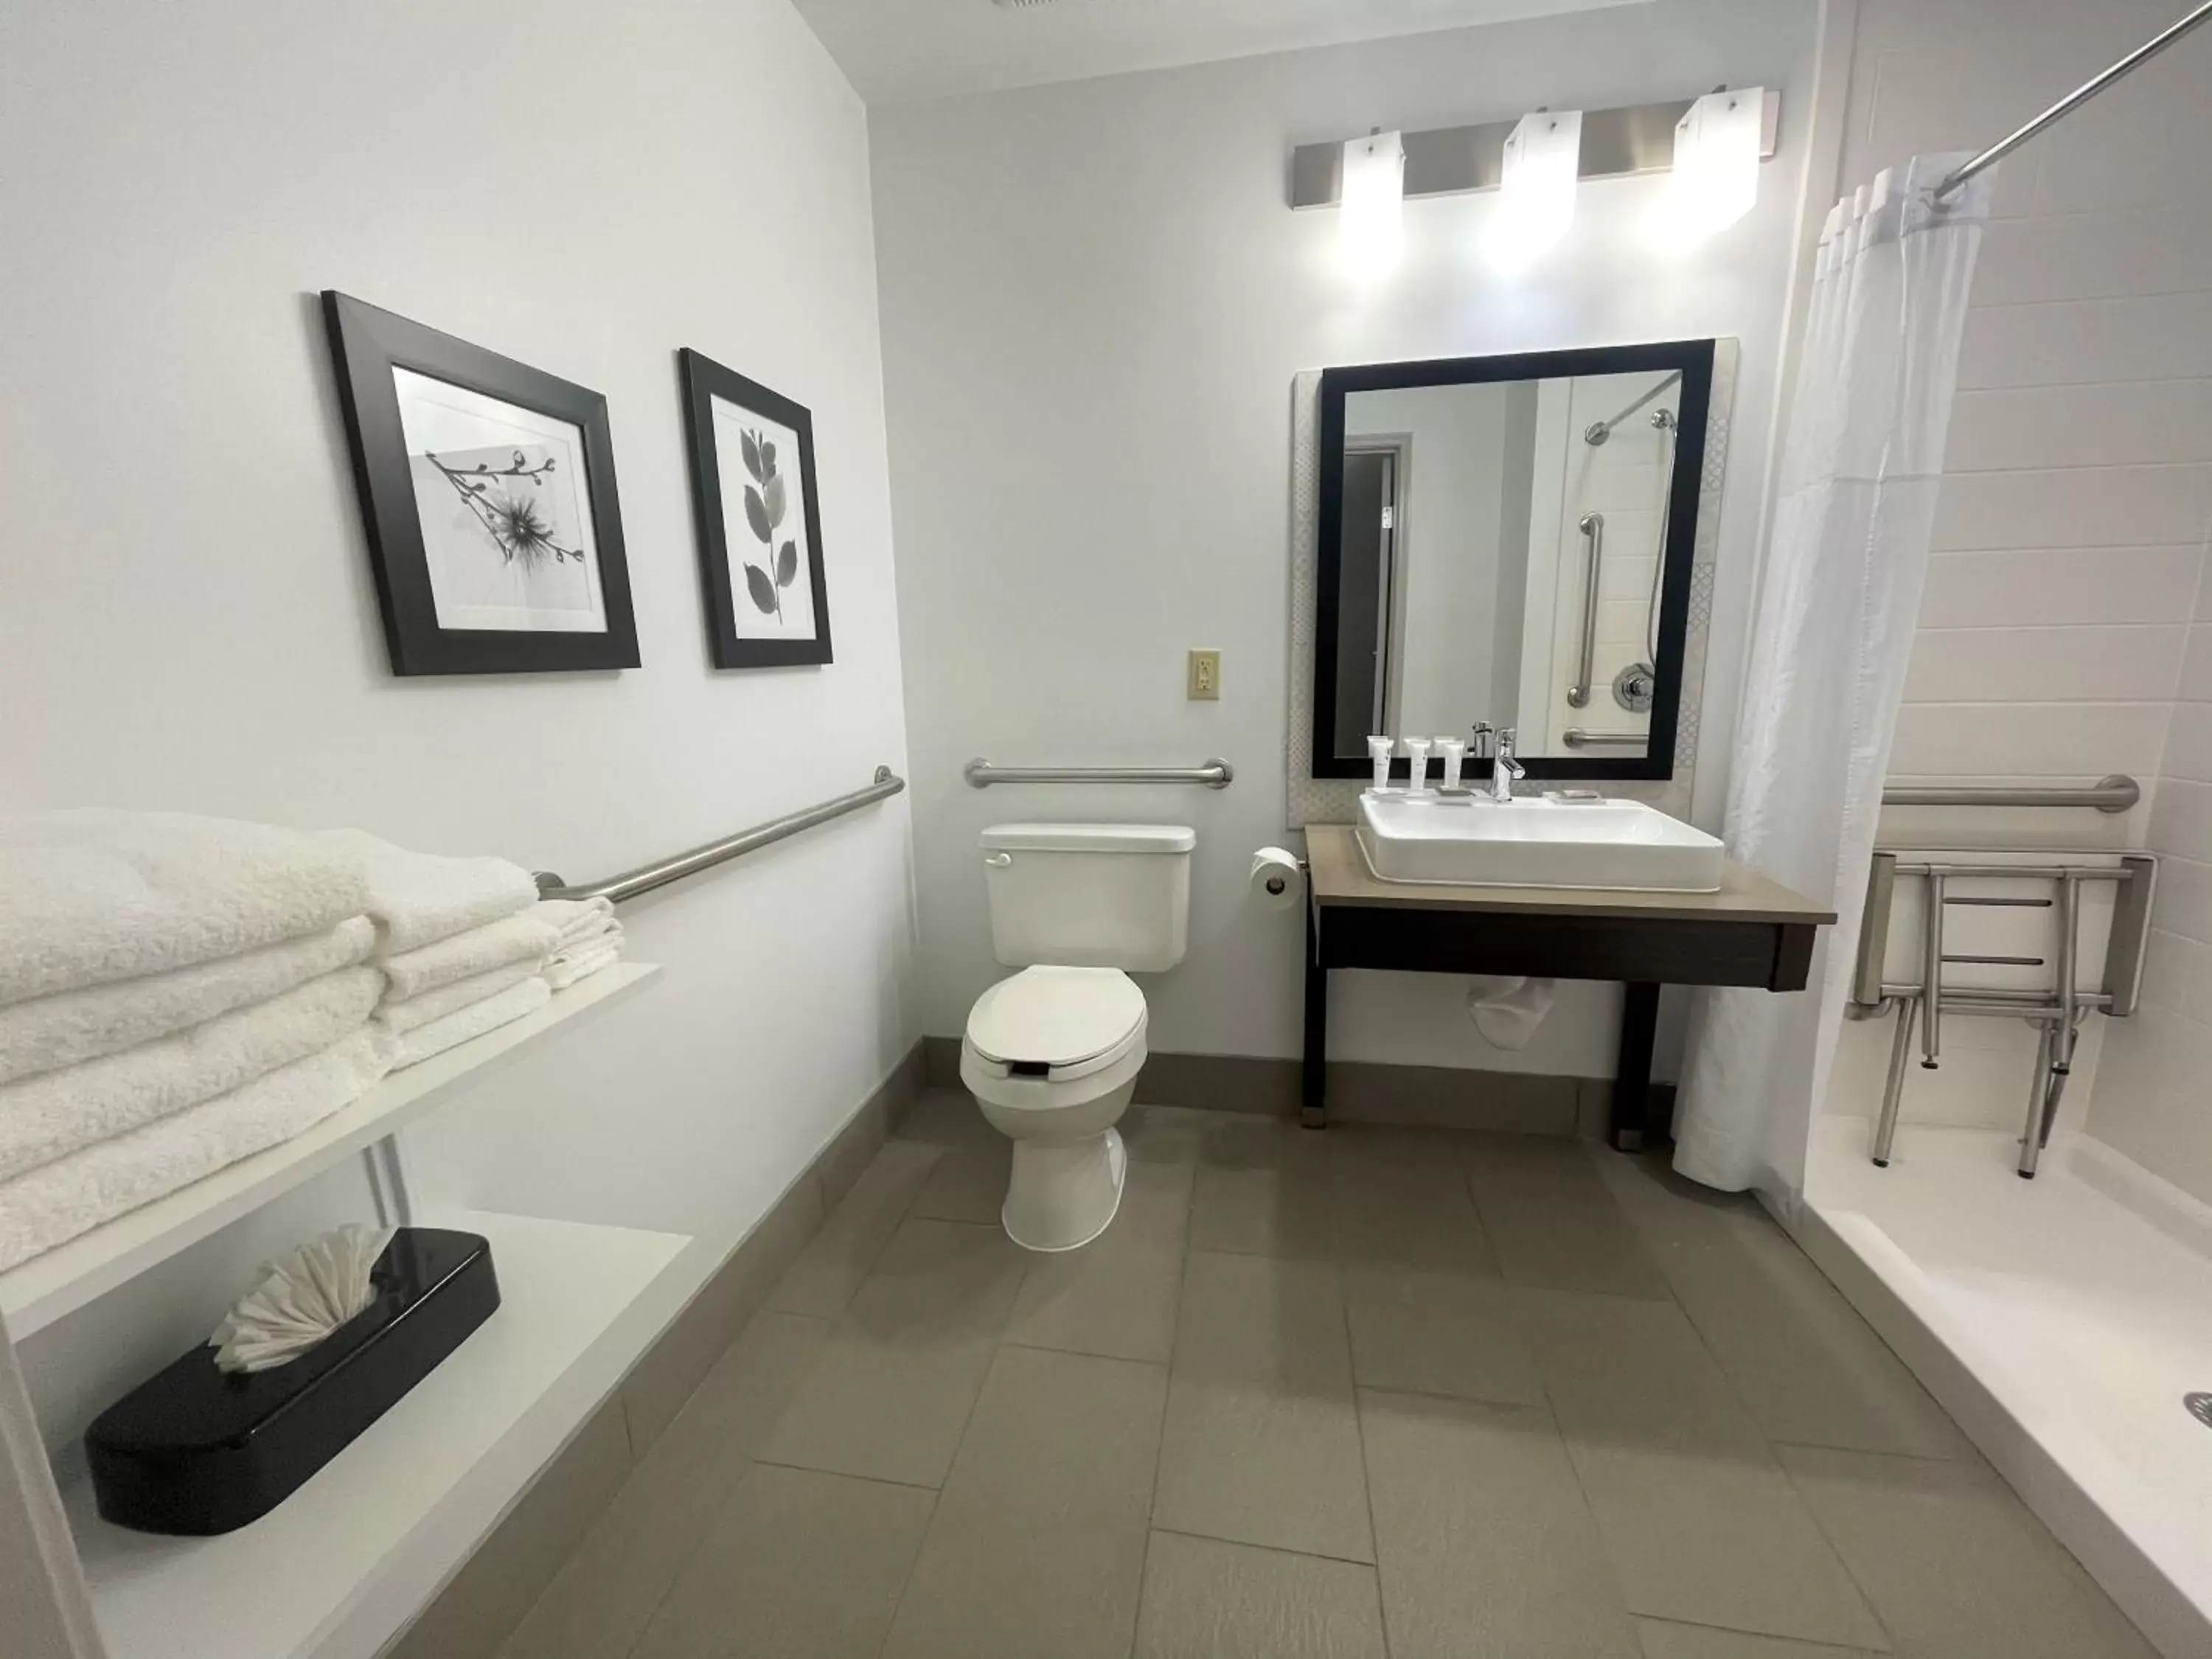 Bathroom in Country Inn & Suites by Radisson, Stone Mountain, GA